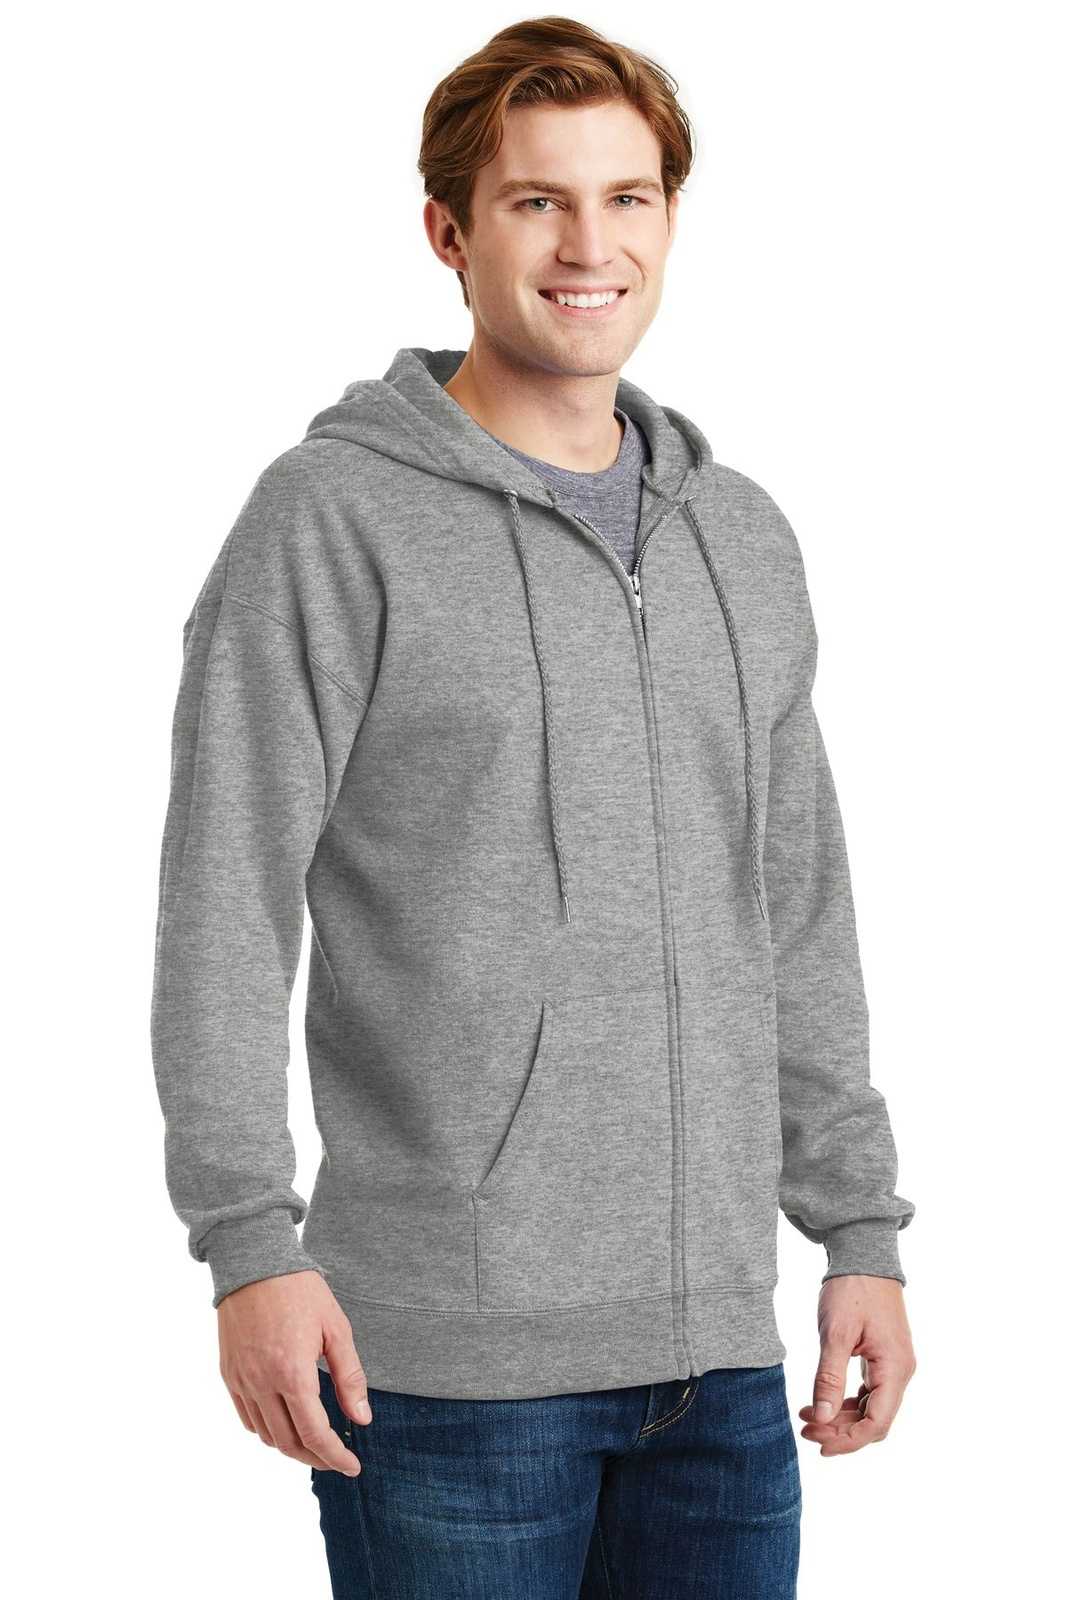 Hanes F283 Ultimate Cotton Full-Zip Hooded Sweatshirt - Light Steel